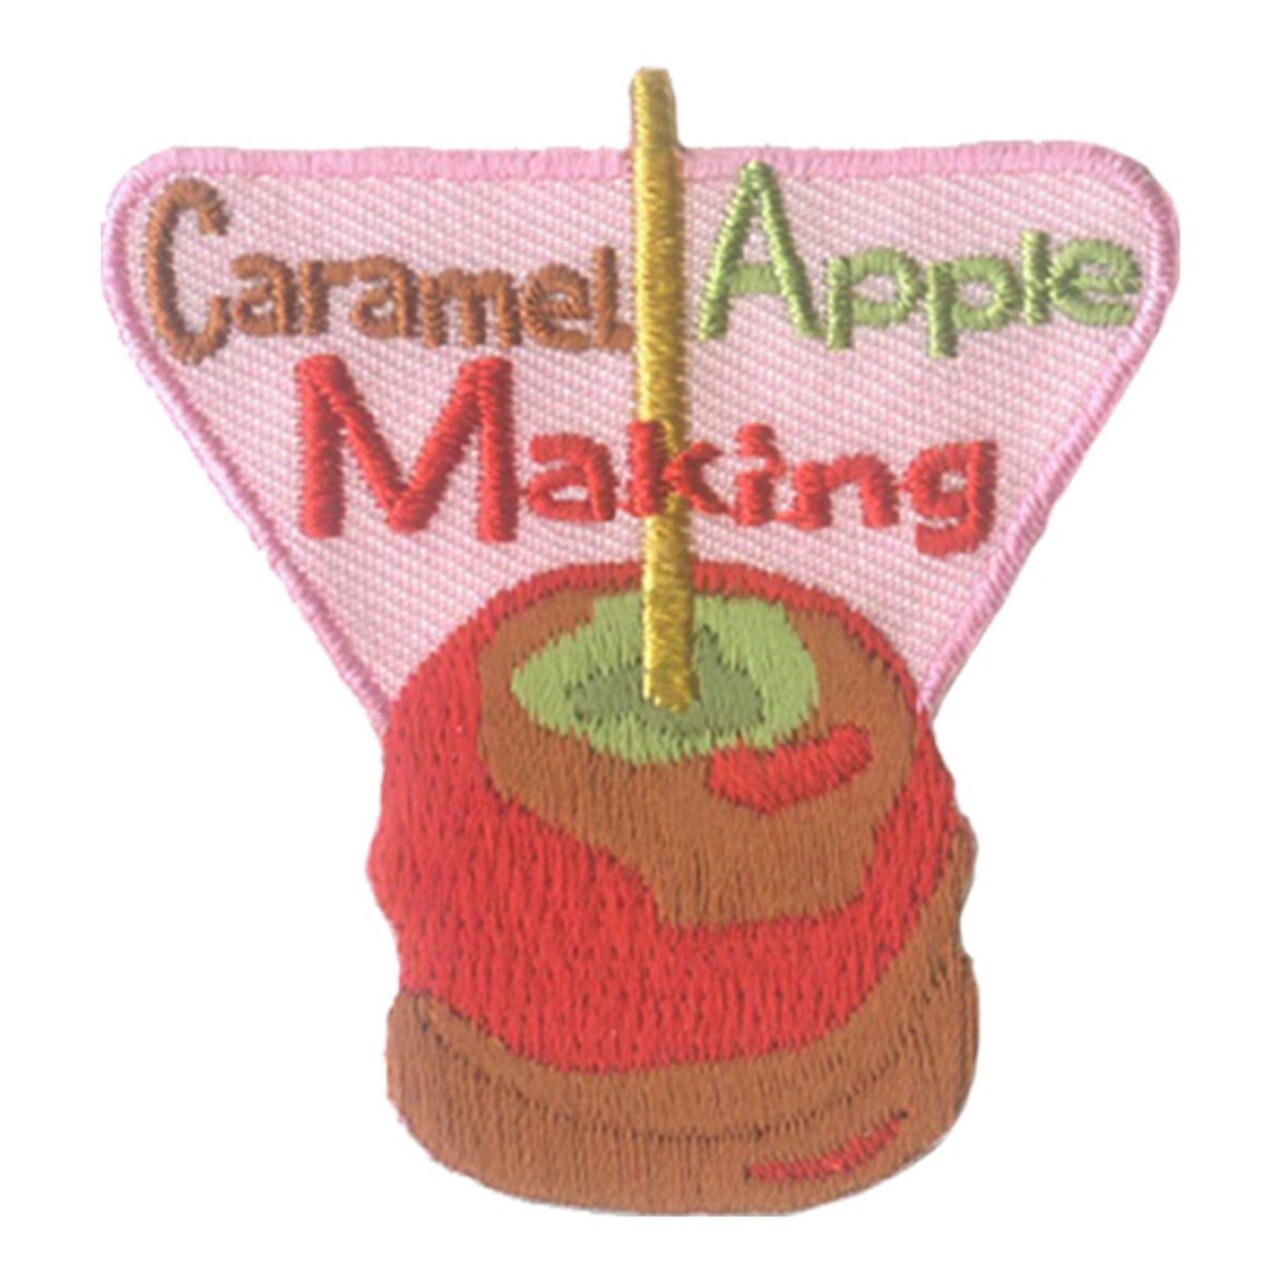 Caramel Apple Making Patch